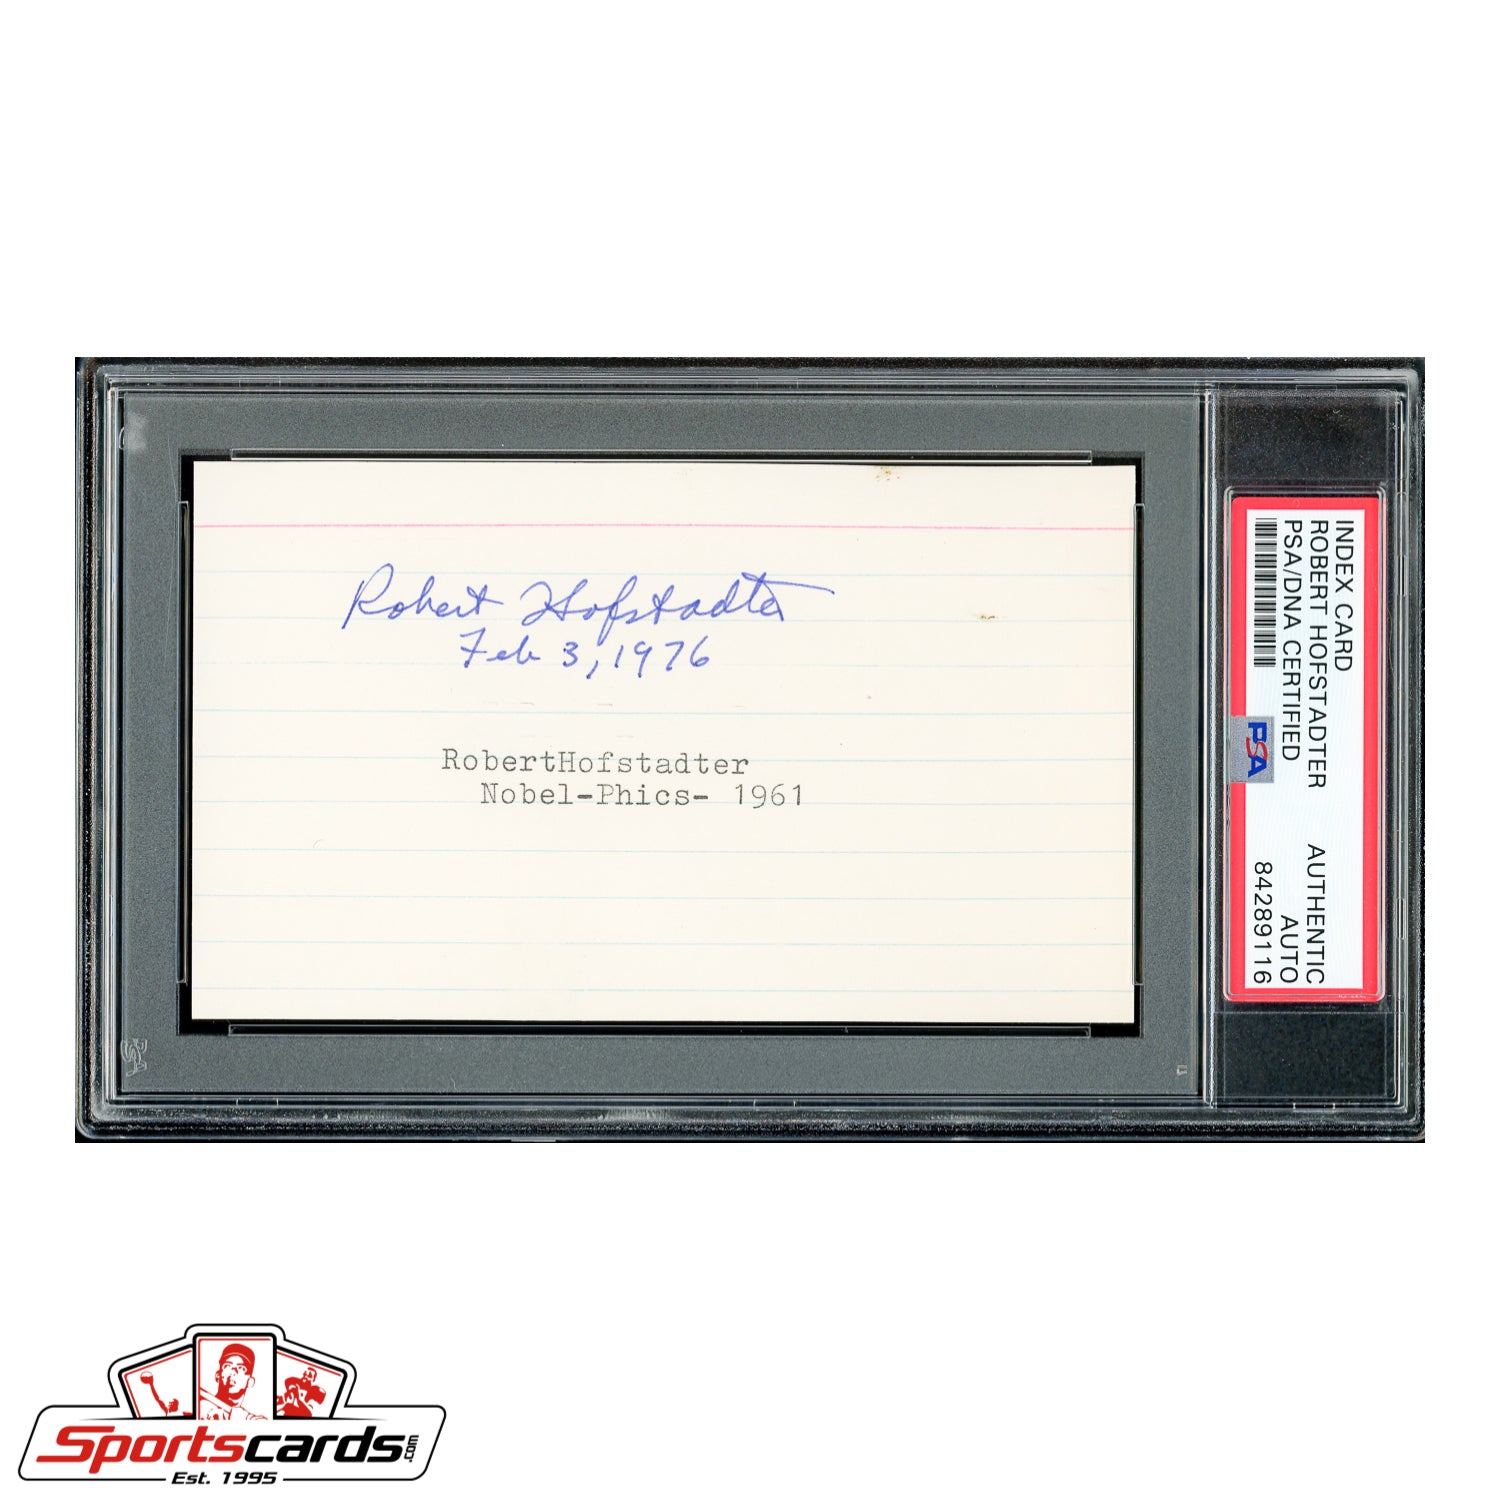 1961 Nobel Prize Winner Robert Hofstadter Signed Autographed 3x5 Index Card - PSA/DNA